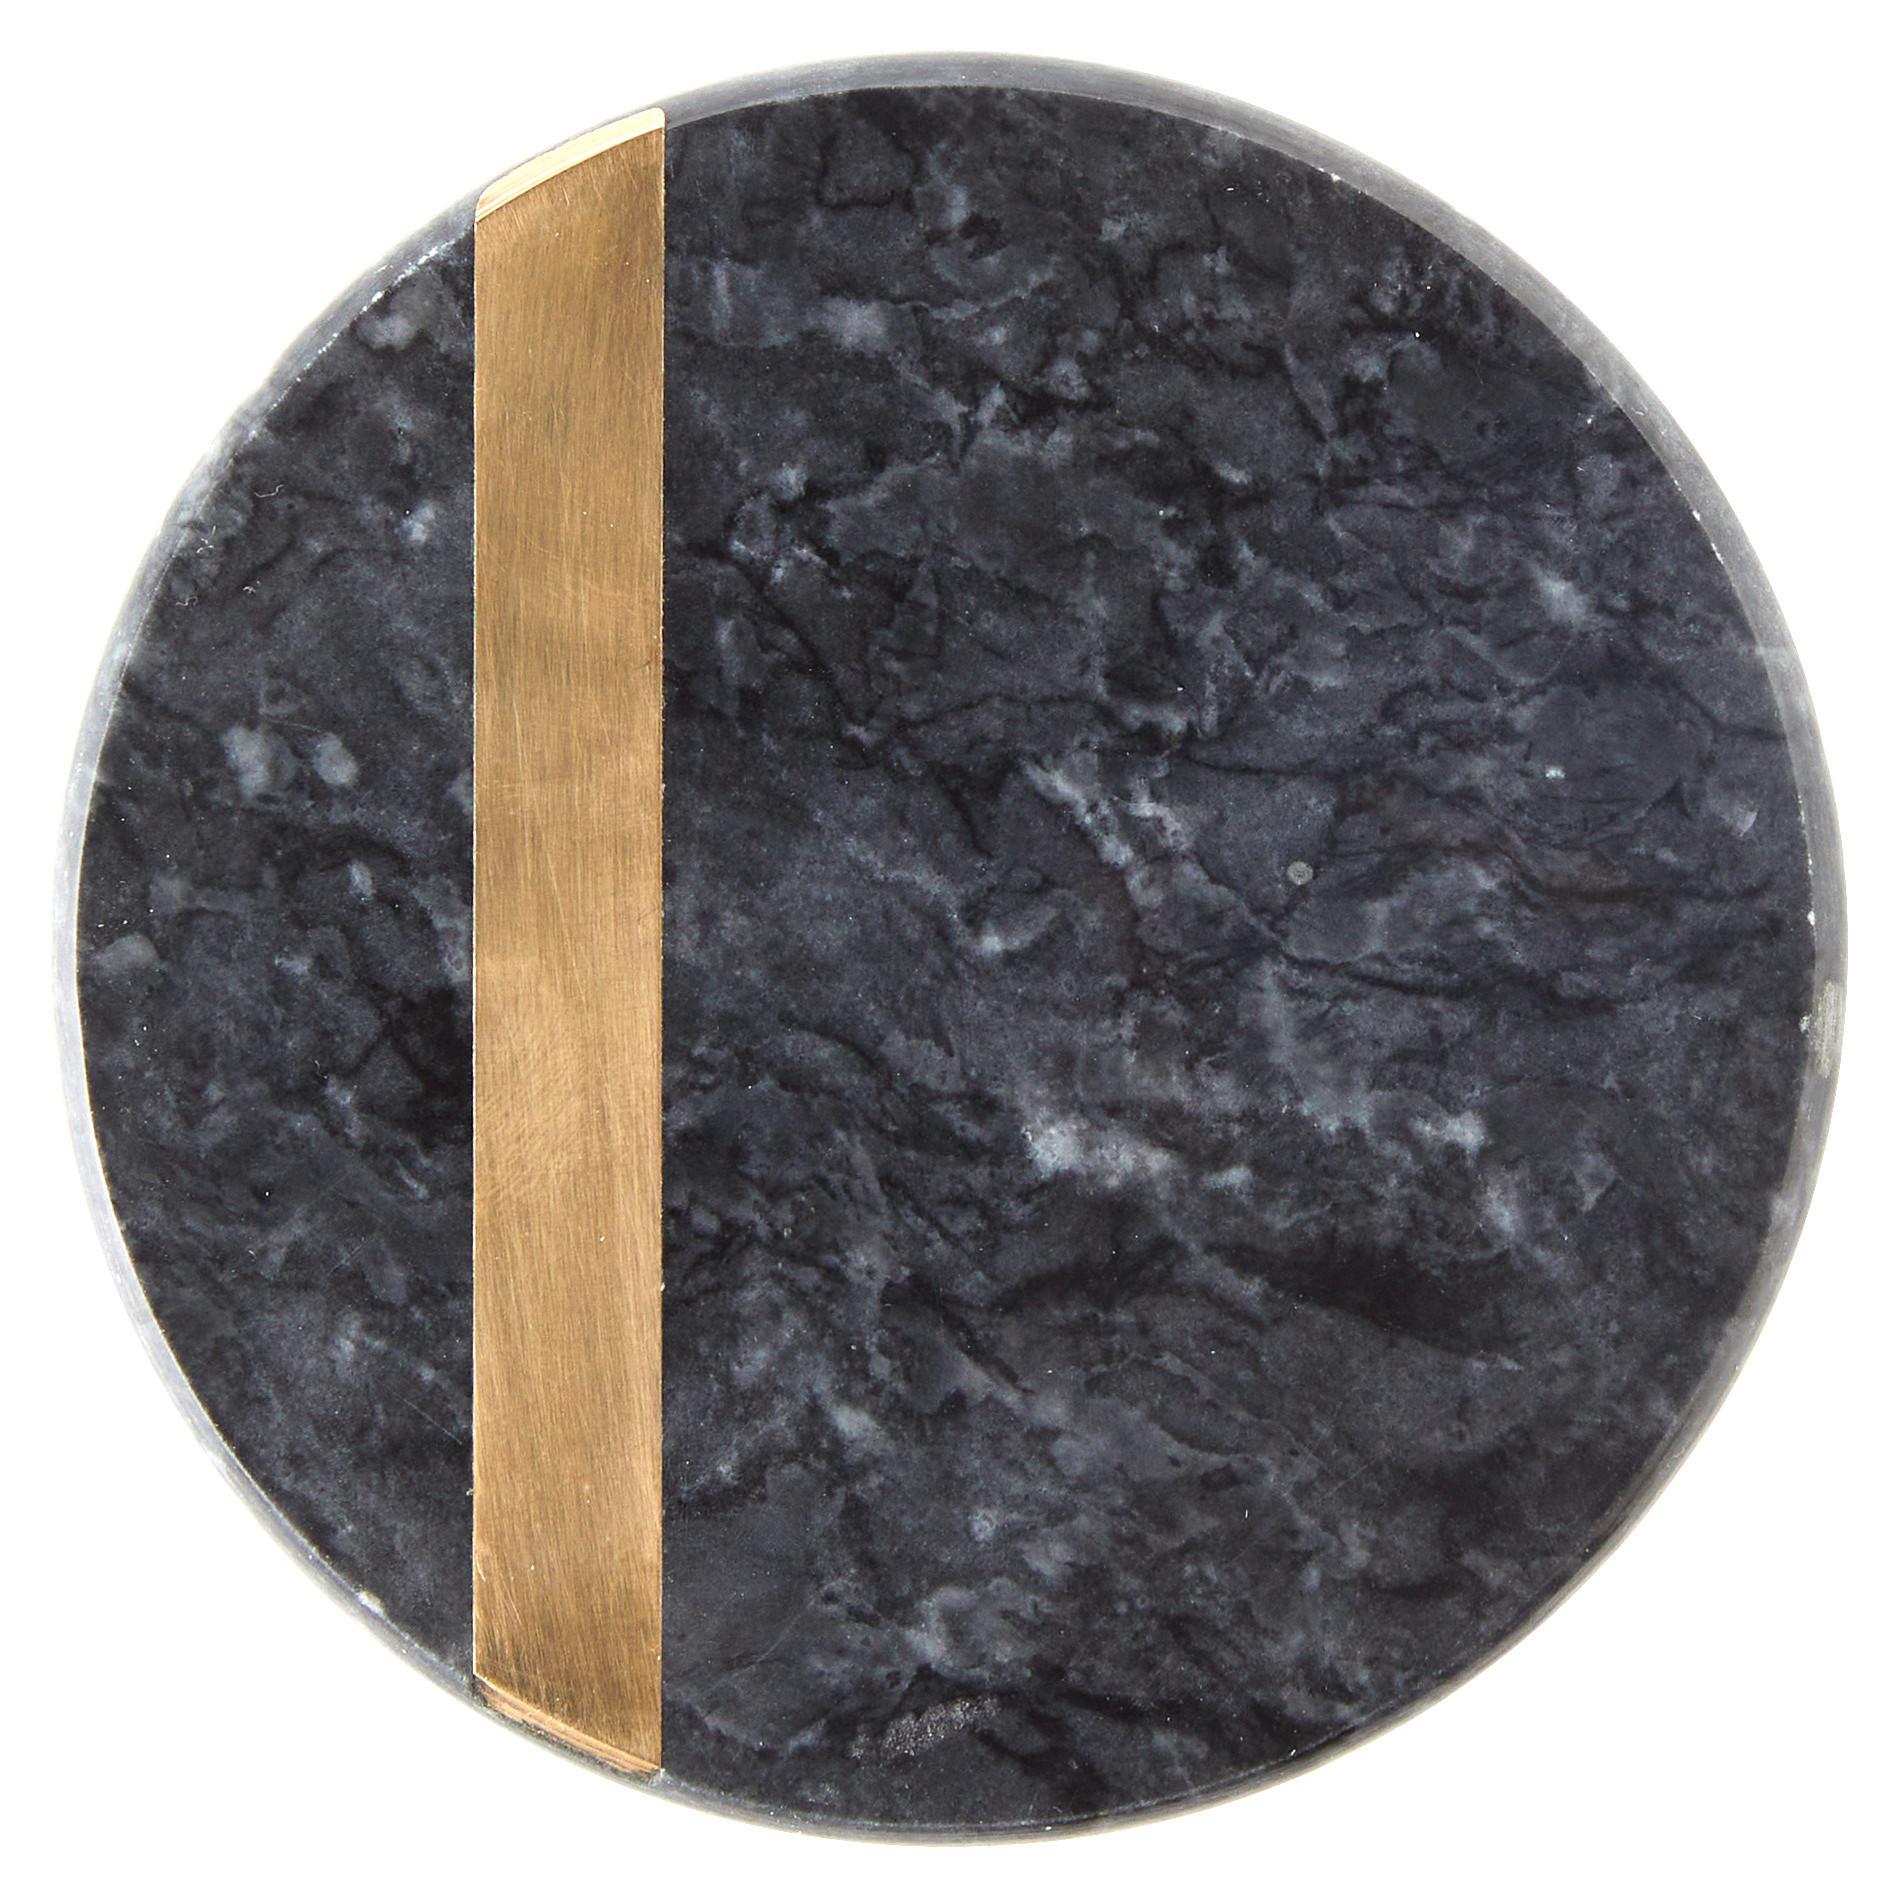 Podložka Glam - černá/barvy zlata, Moderní, kov/kámen (10,2/1cm) - Premium Living